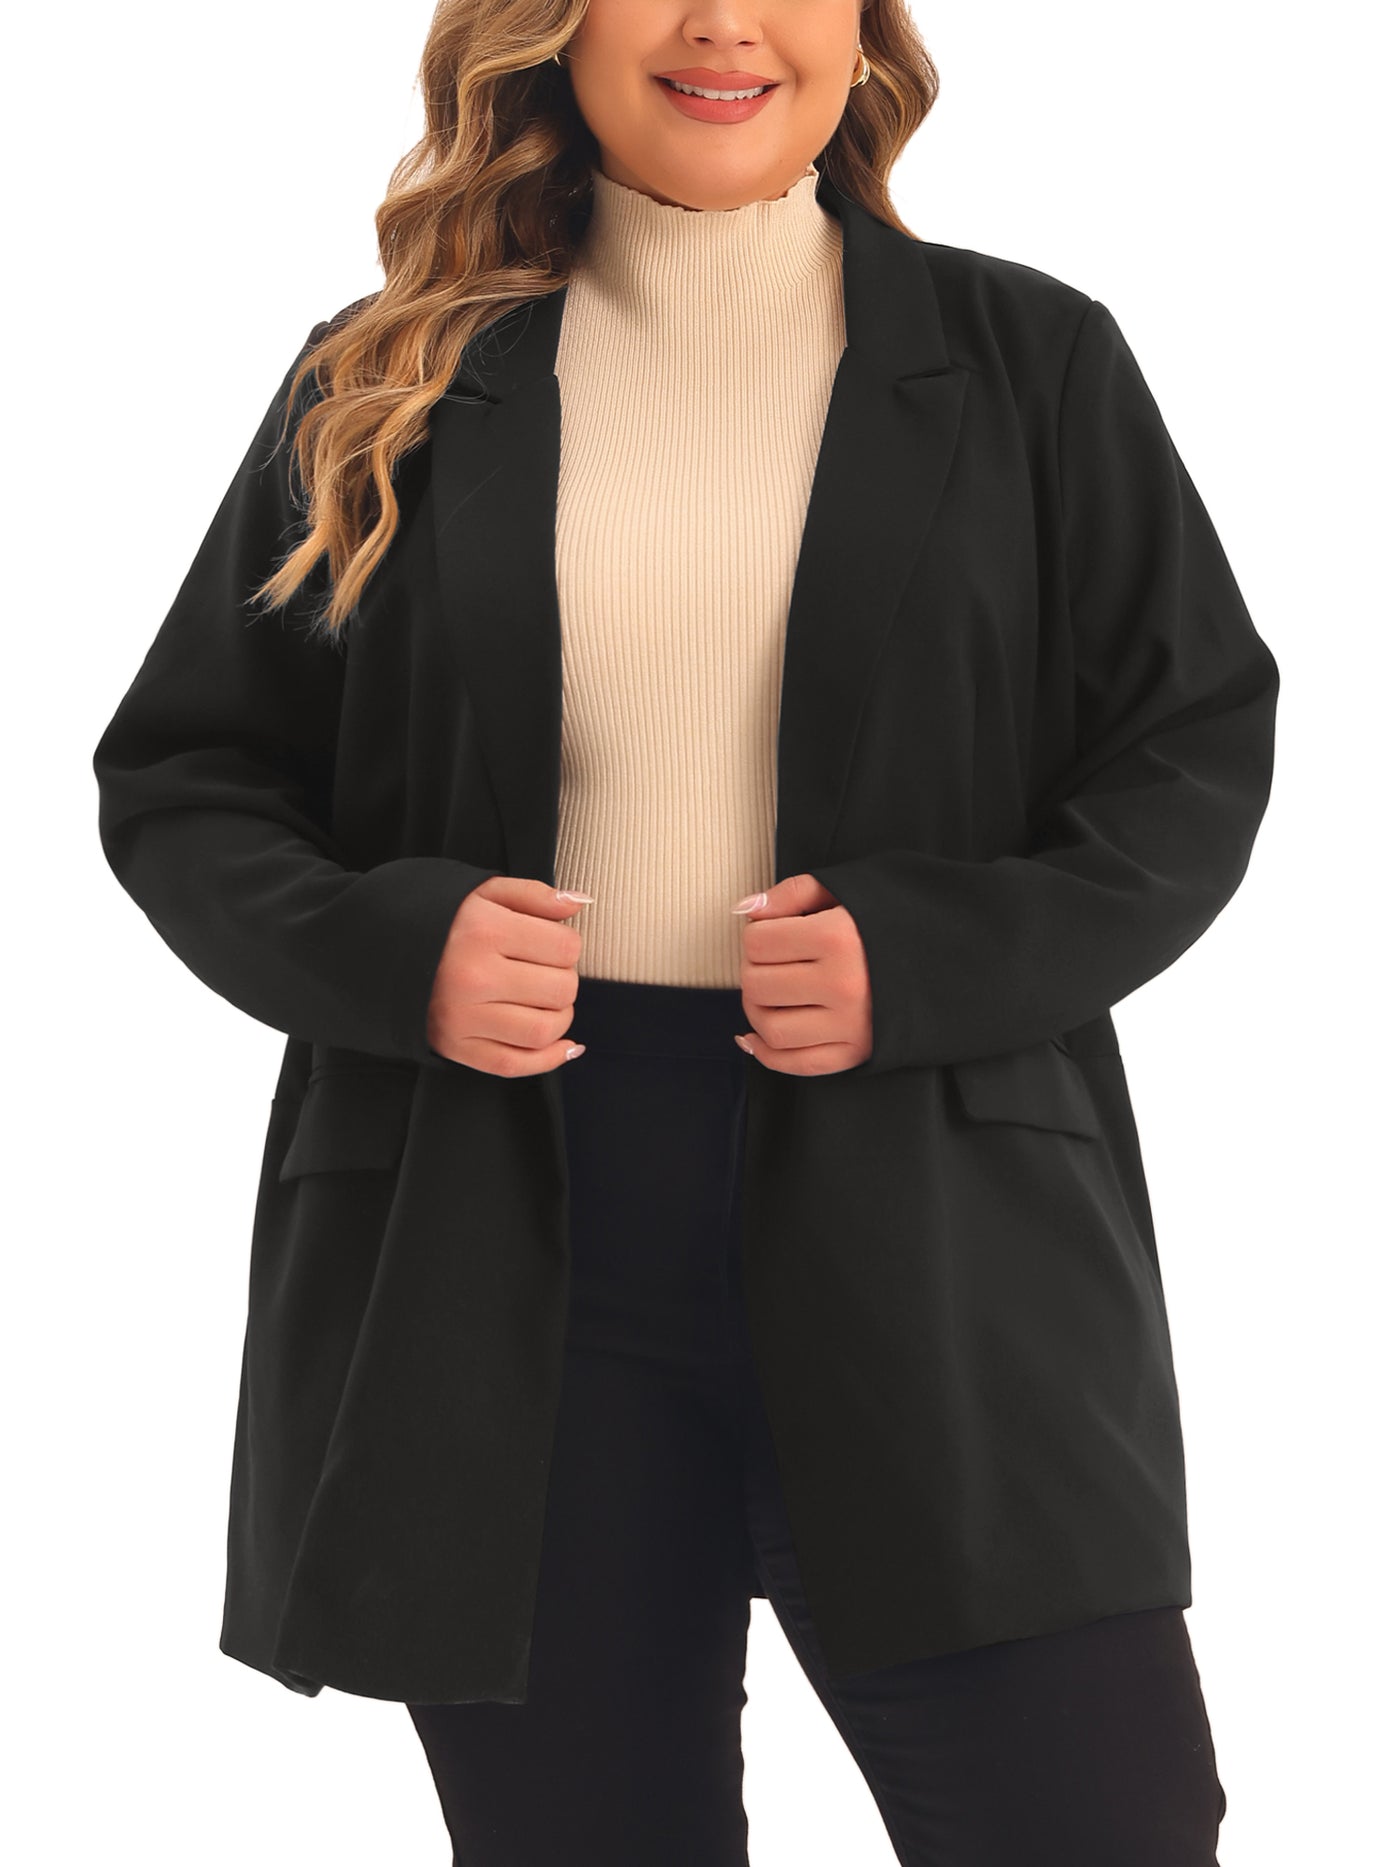 Bublédon Plus Size Blazers for Women Lapel Button with Pockets Office Work Jackets Blazer